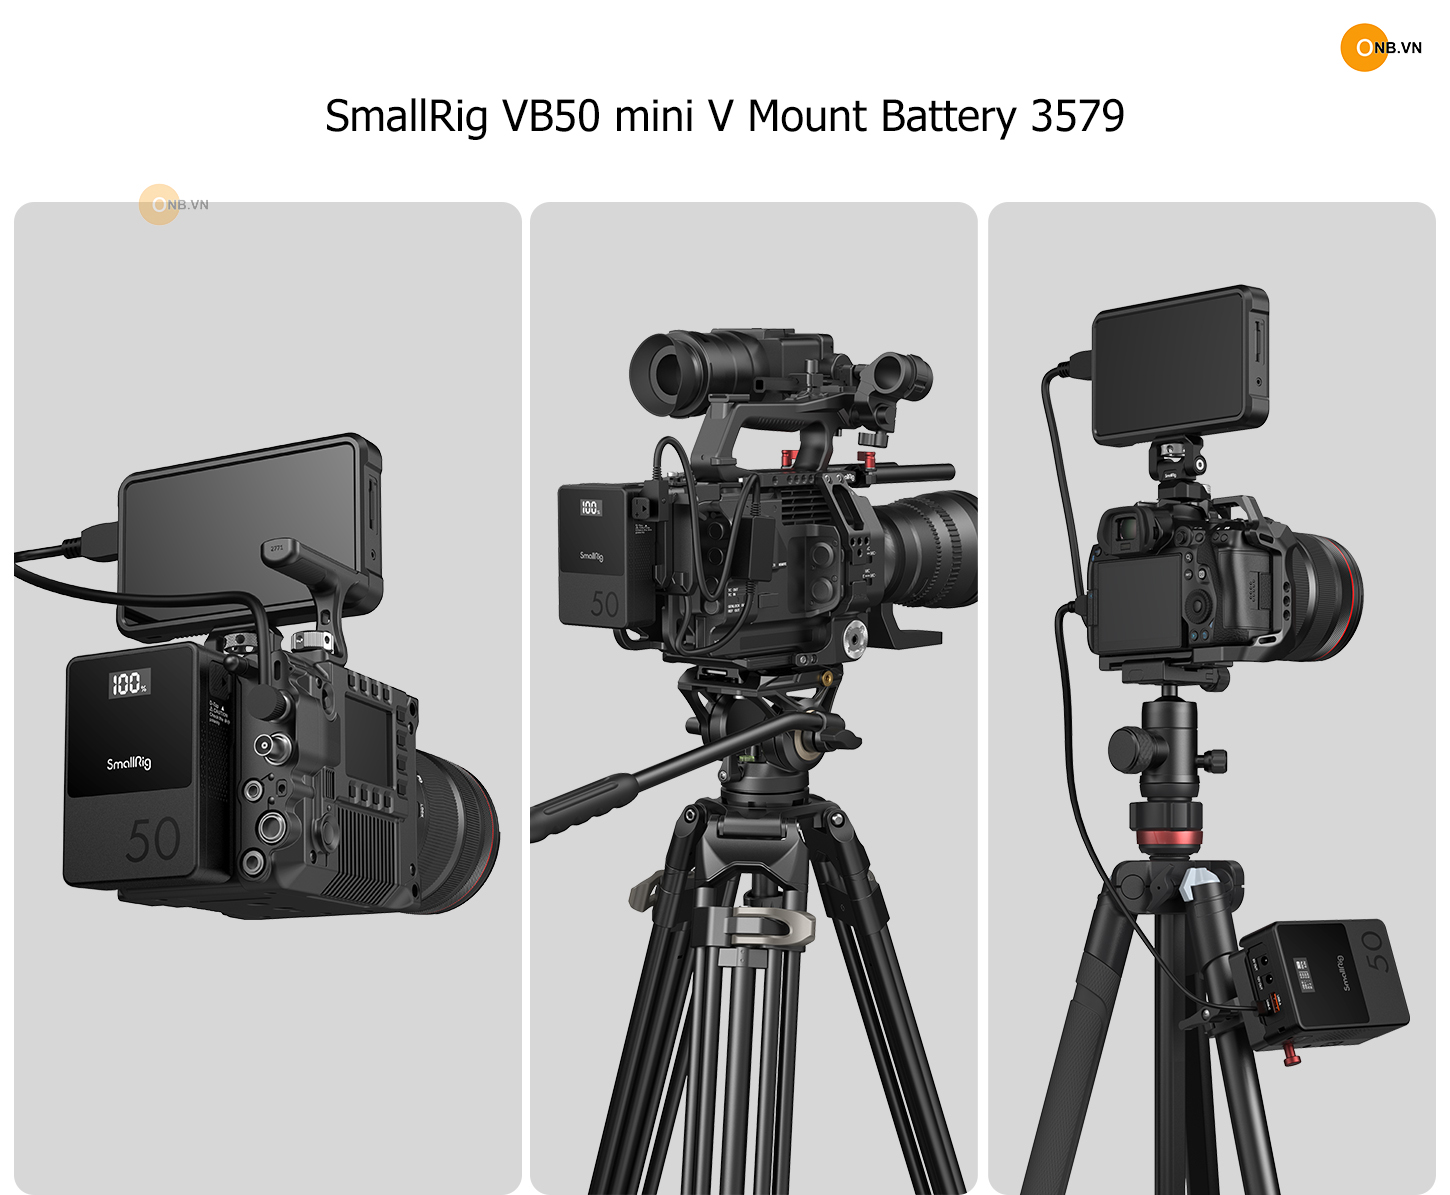 SmallRig VB99 mini V Mount Battery 3580